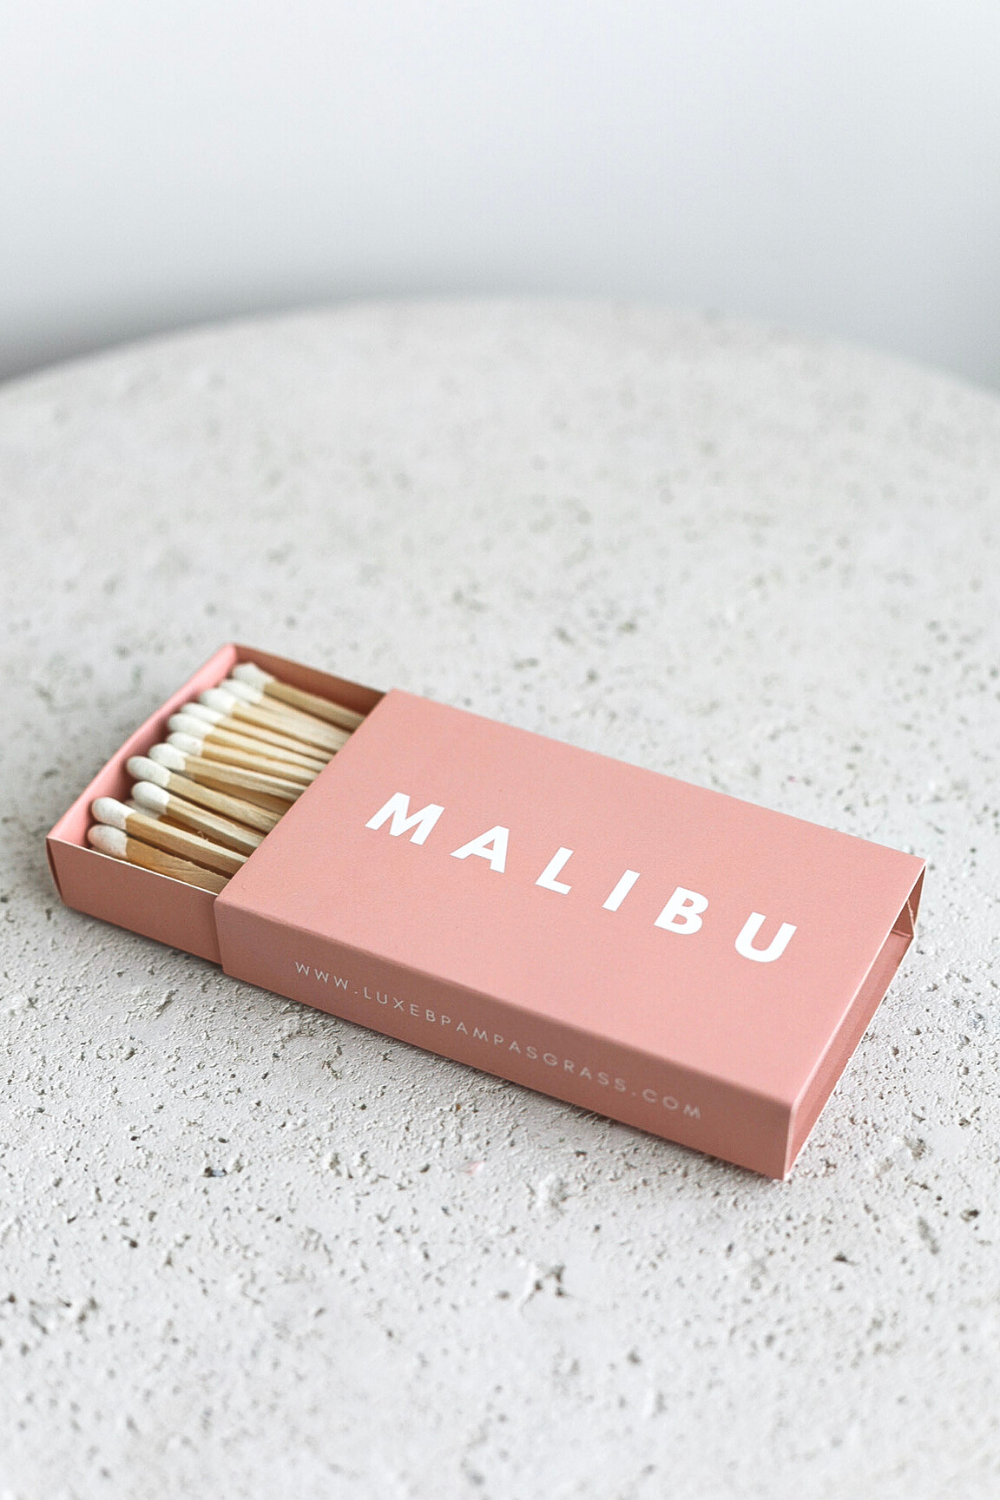 Luxe B Malibu Matchbox - Luxe B Co